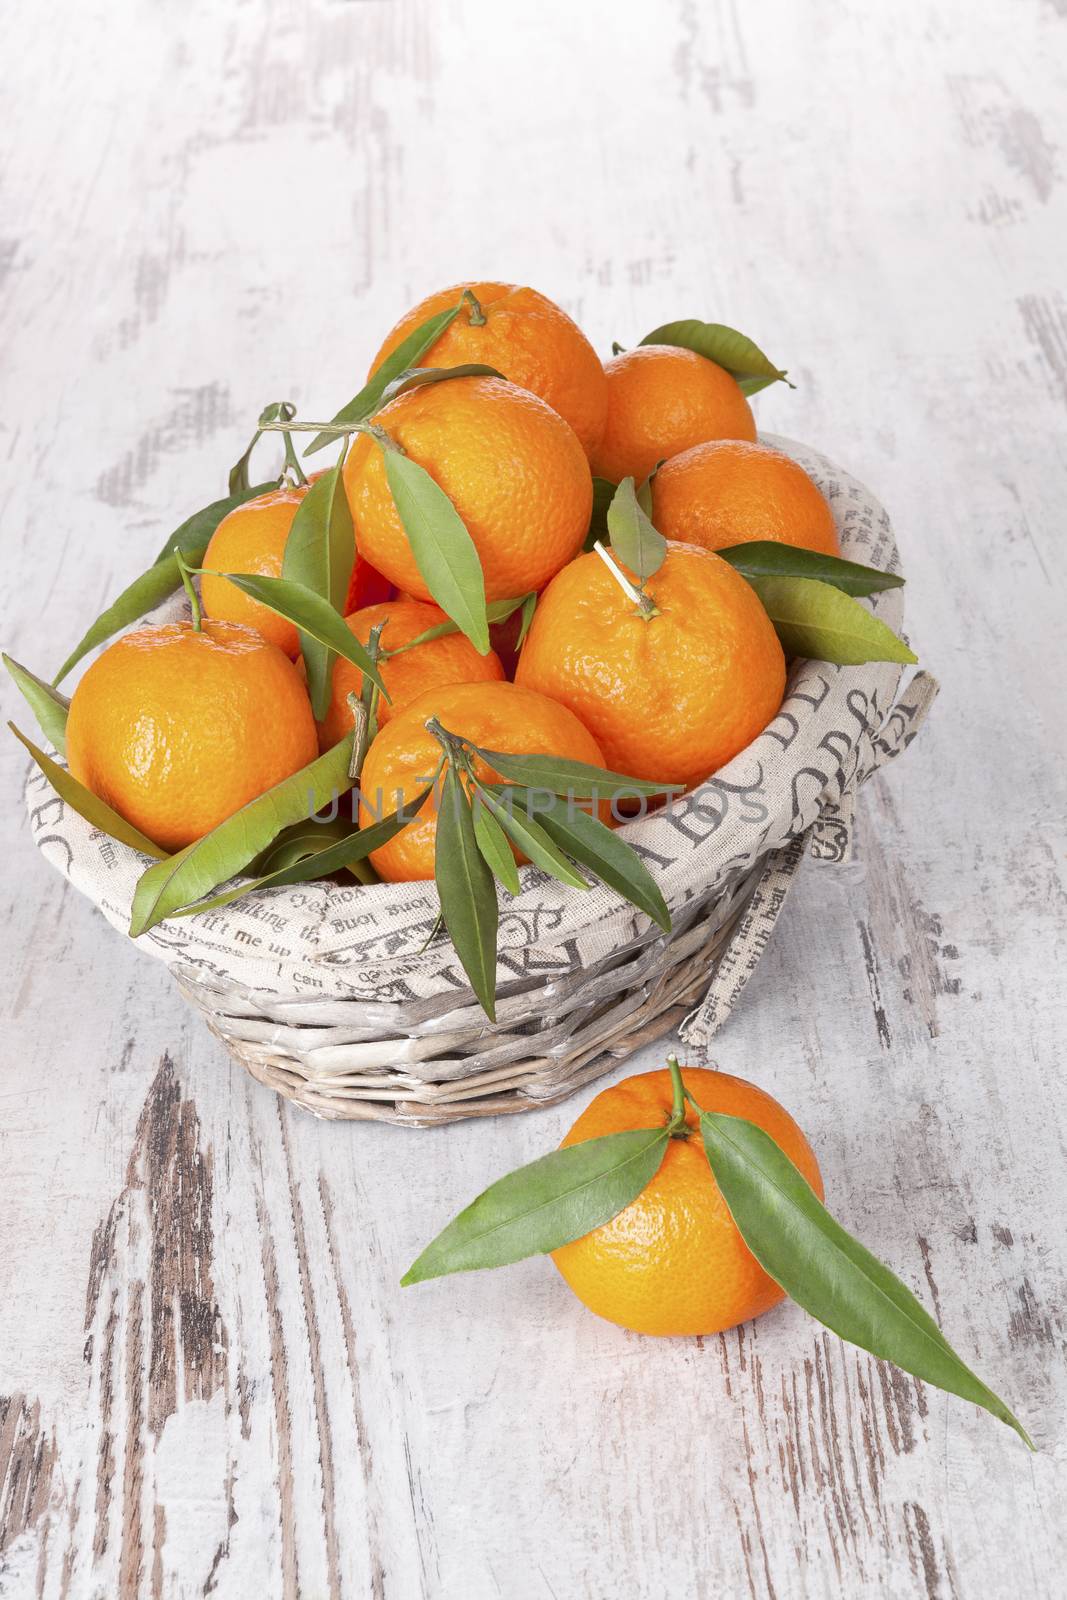 Mandarine fruit, provence style. by eskymaks